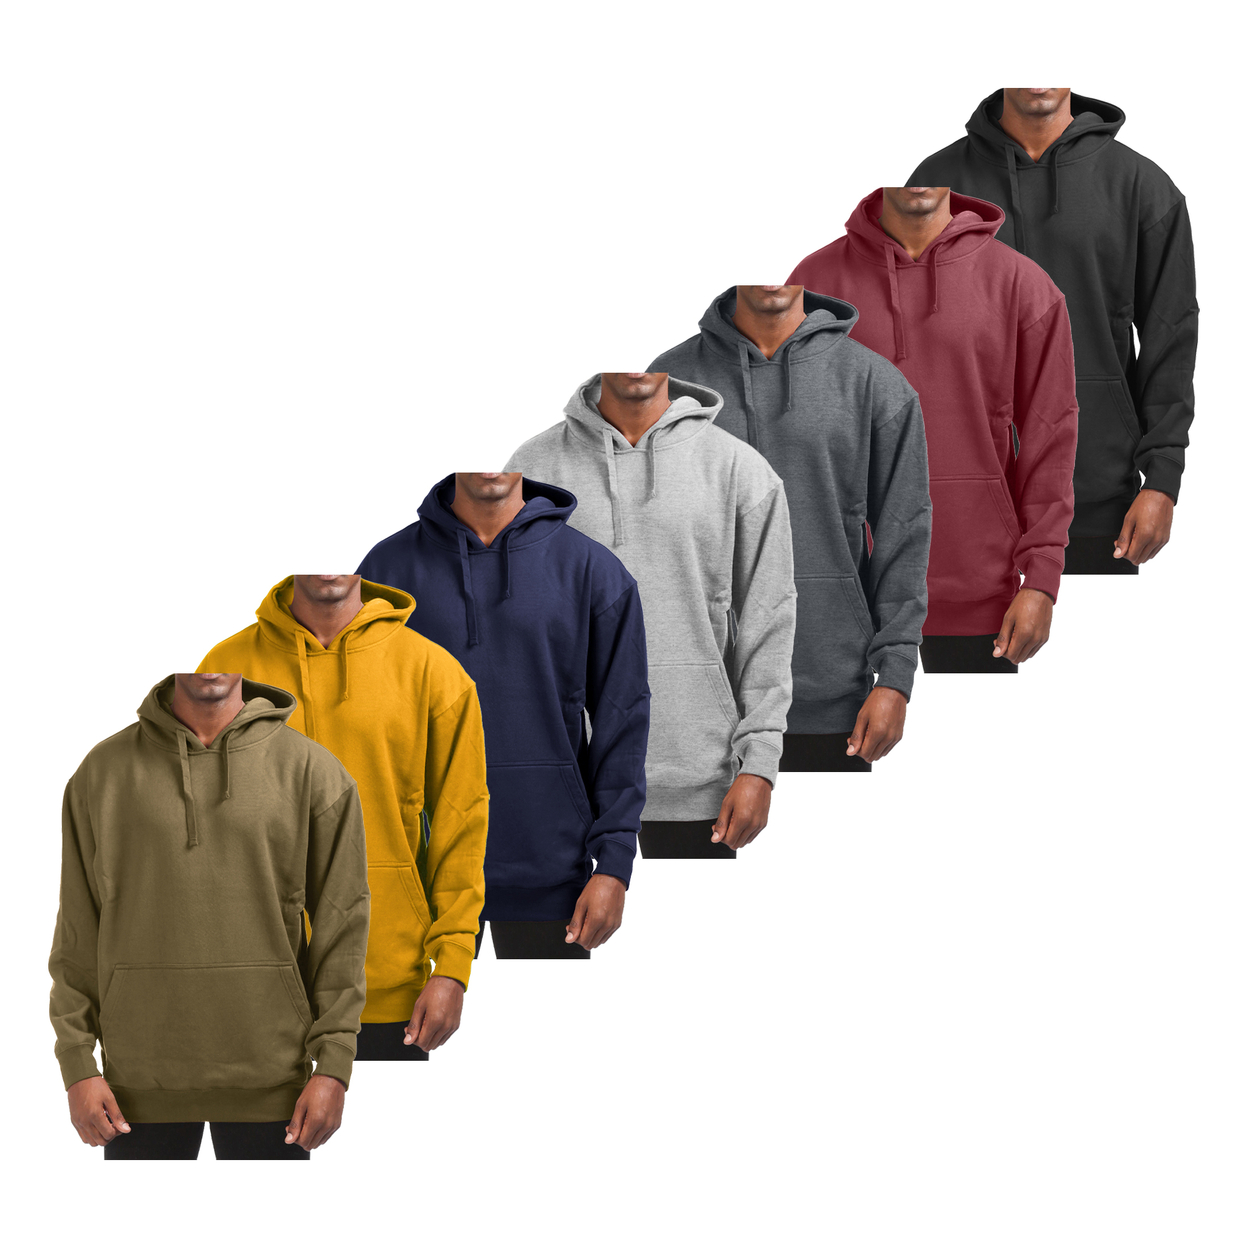 2-Pack: Men's Super-Soft Winter Warm Cotton-Blend Fleece Pullover Hoodie With Kangaroo Pocket - Black & Black, Large